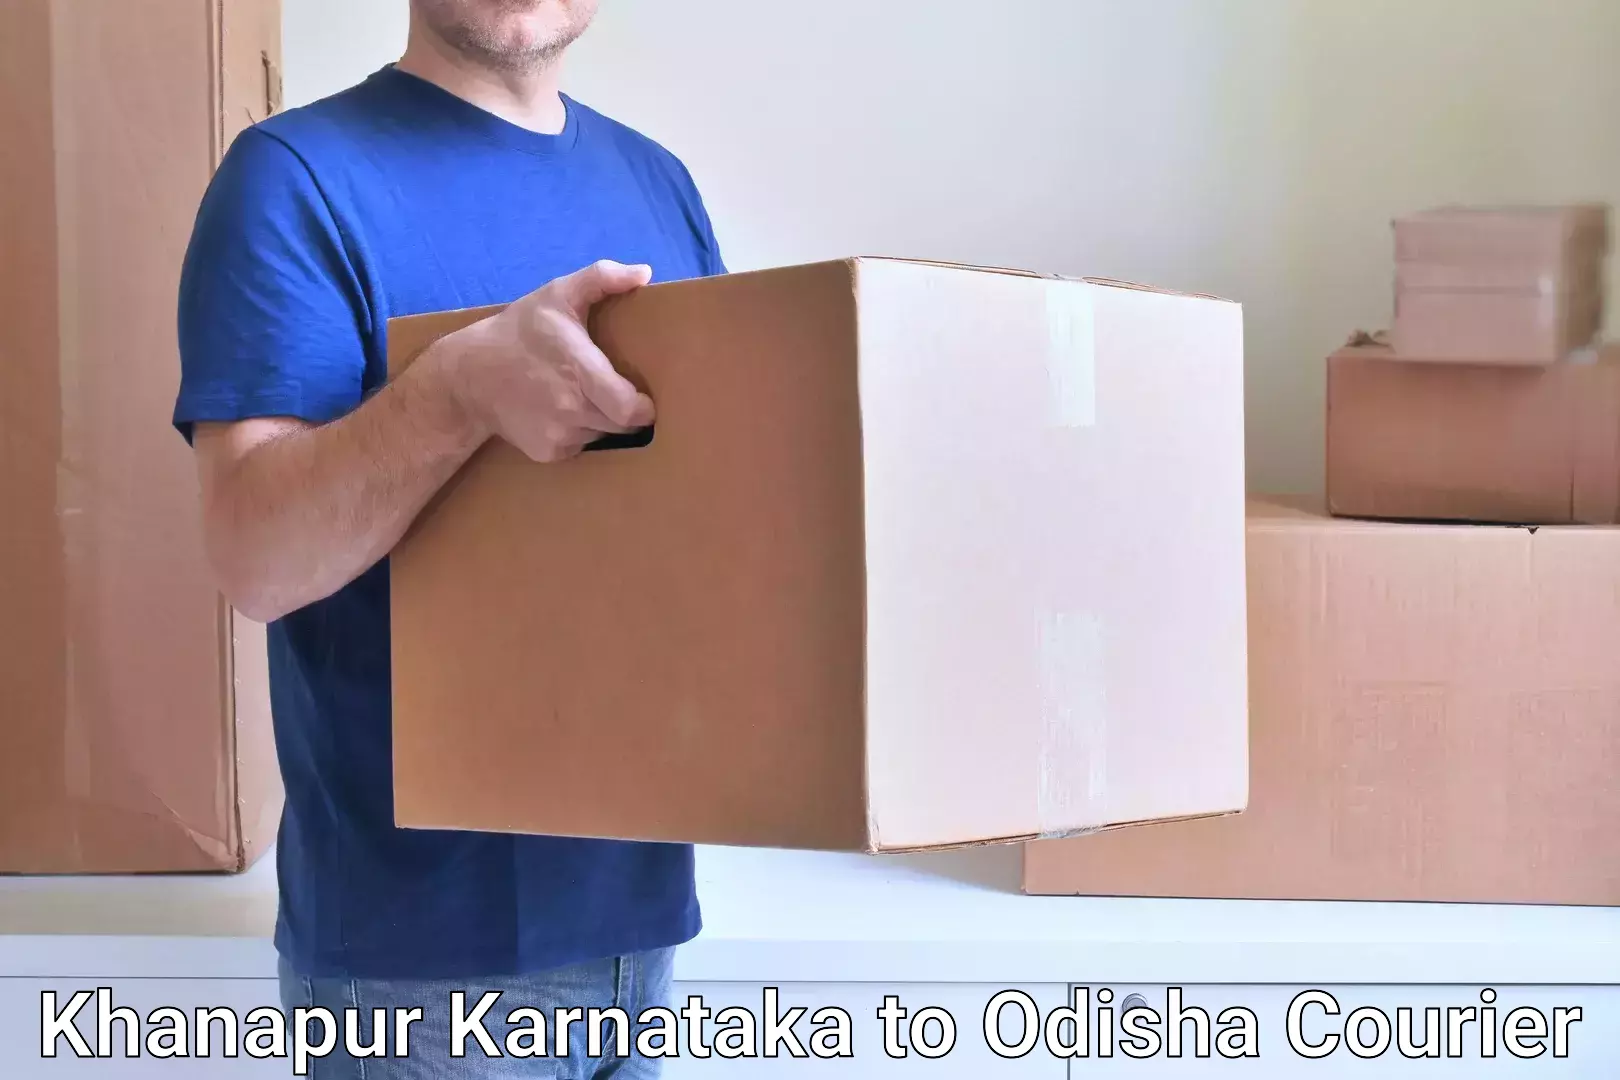 Multi-national courier services Khanapur Karnataka to Dhamara